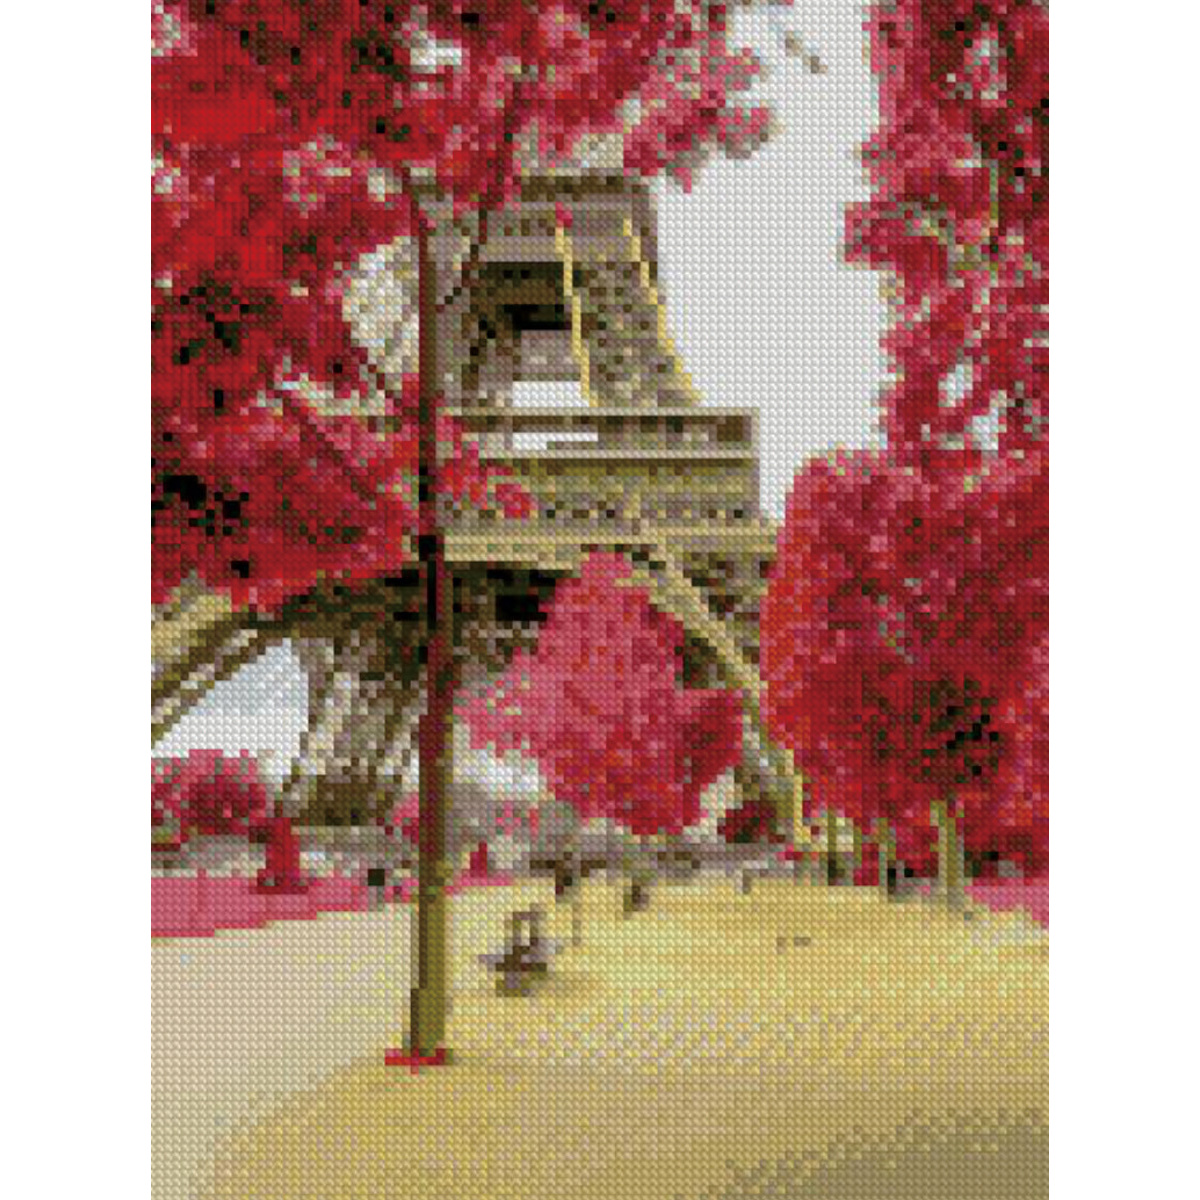 Diamond mosaic Premium HX113 "Tower among the trees", size 30x40 cm